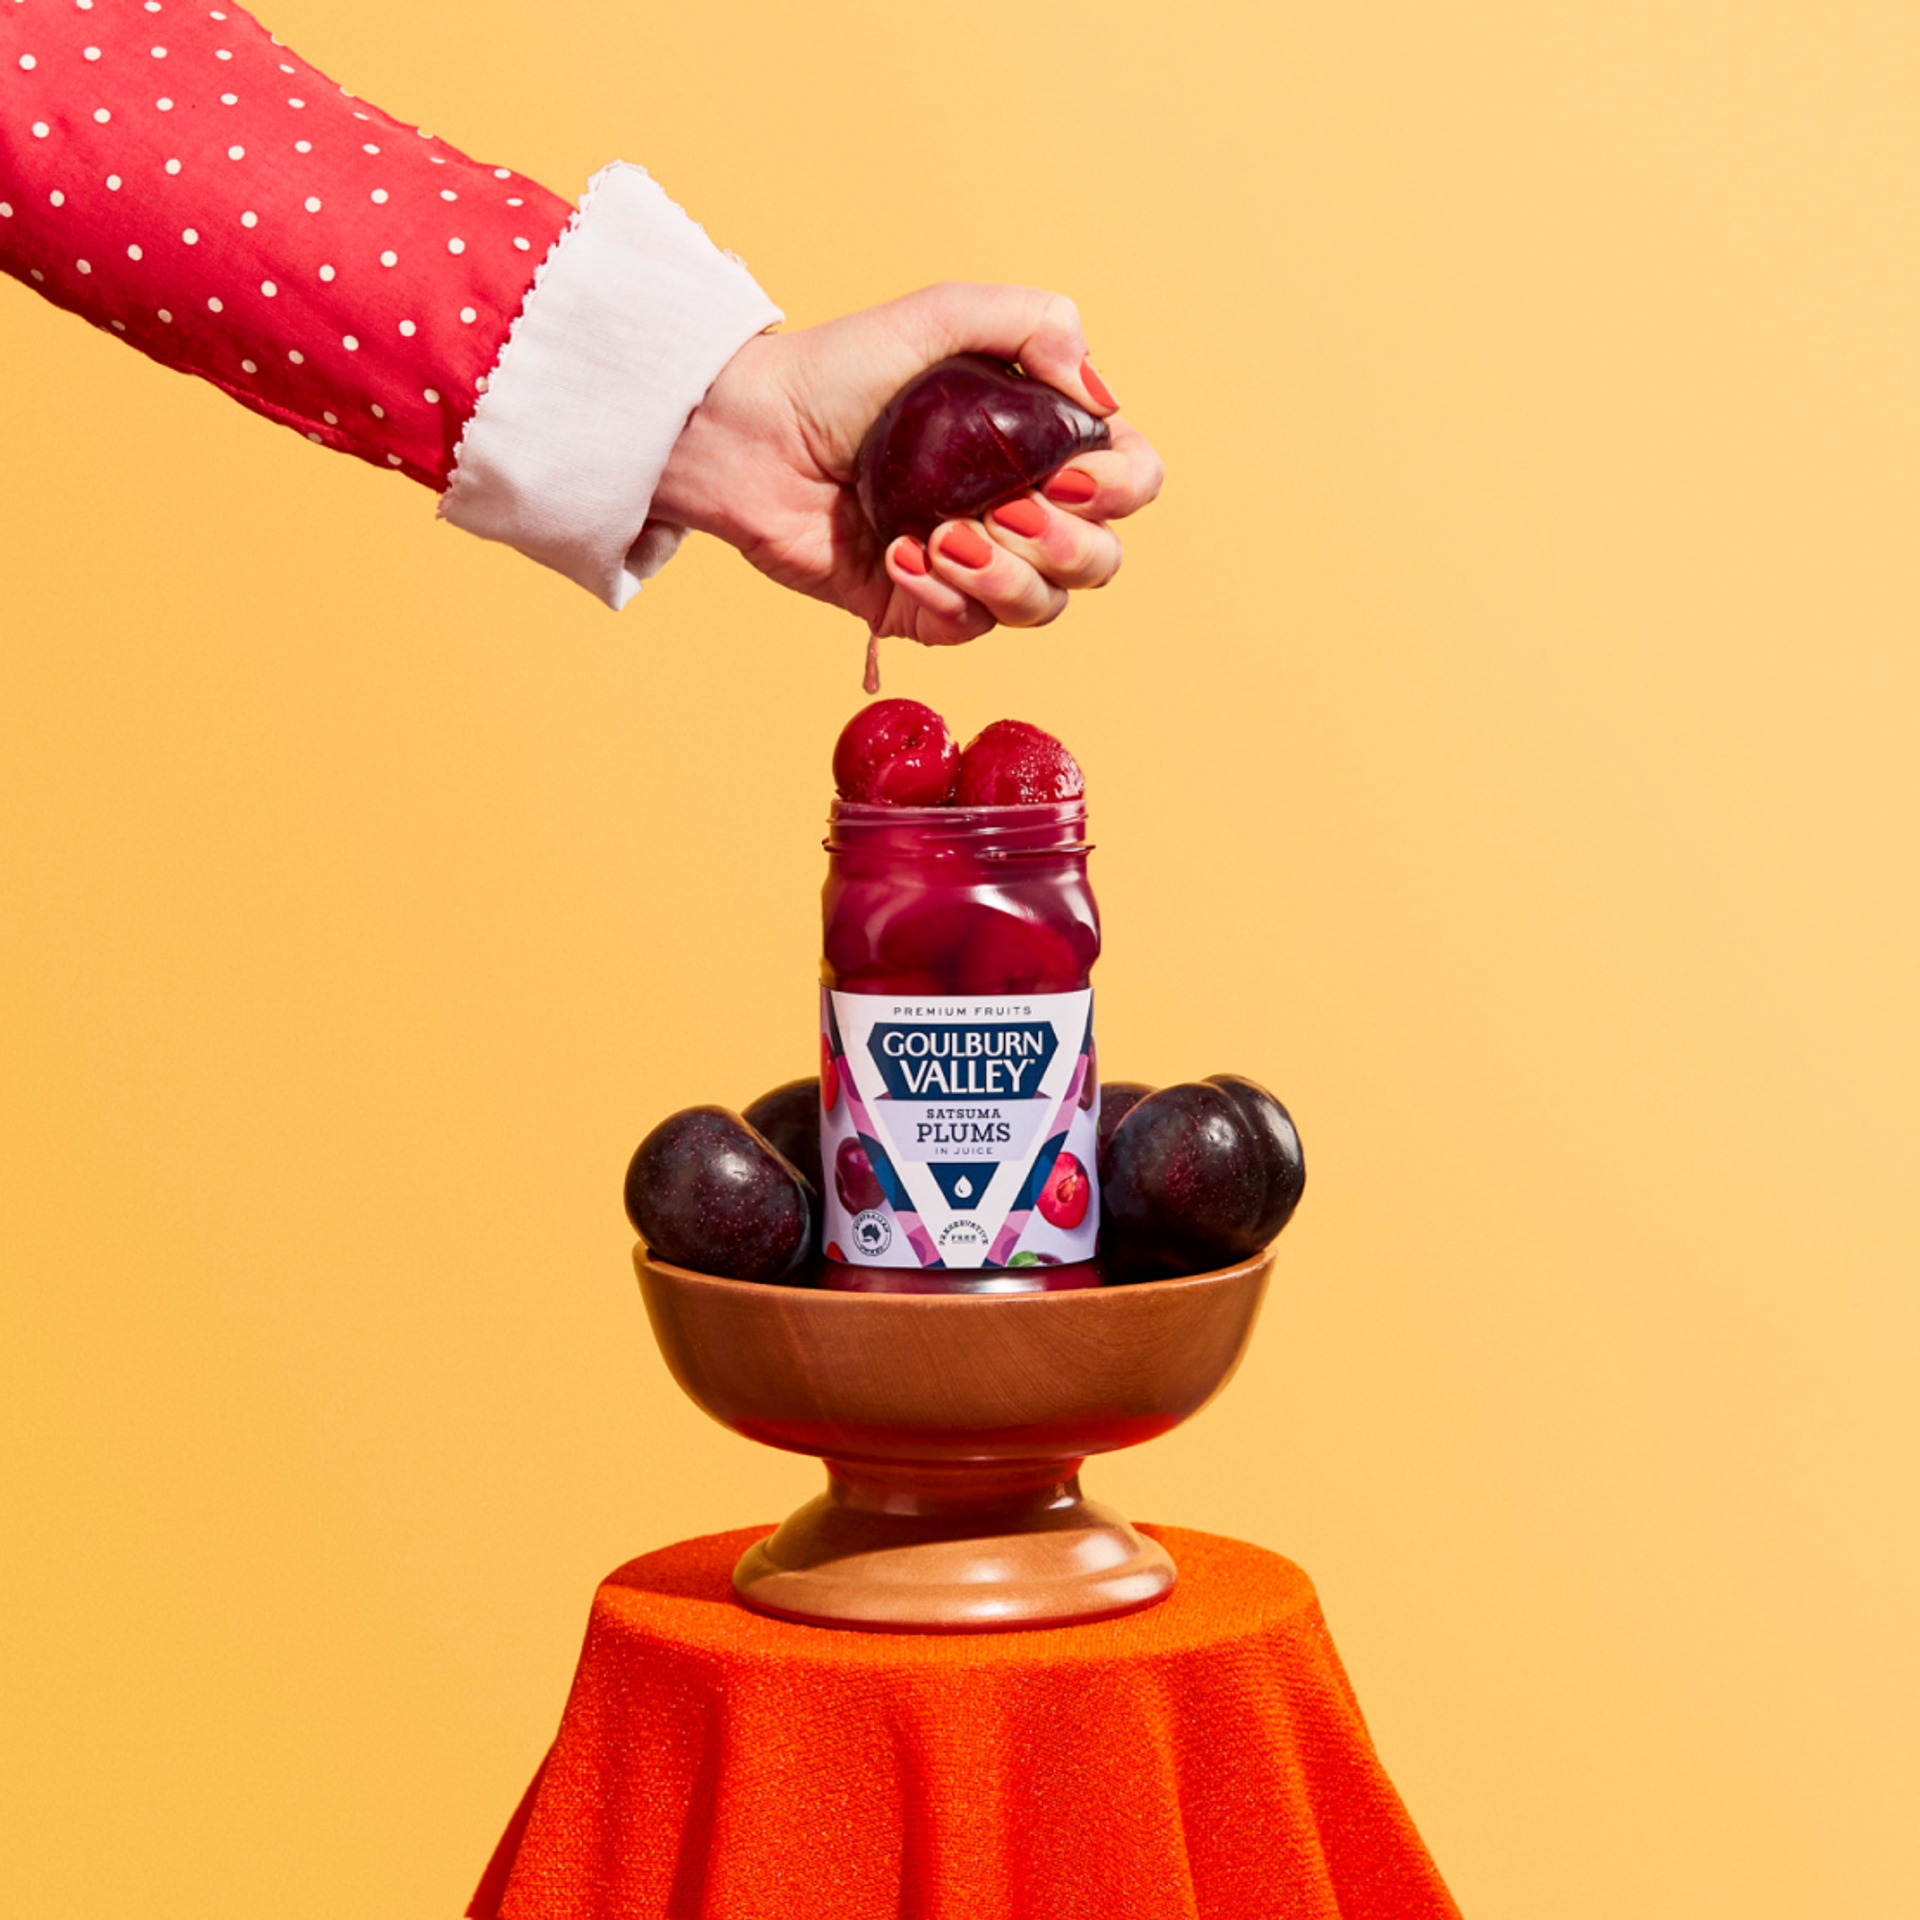 Hand squeezing fresh fruit into Goulburn Valley fruit jar, rebrand design by Sydney packaging design agency Our Revolution